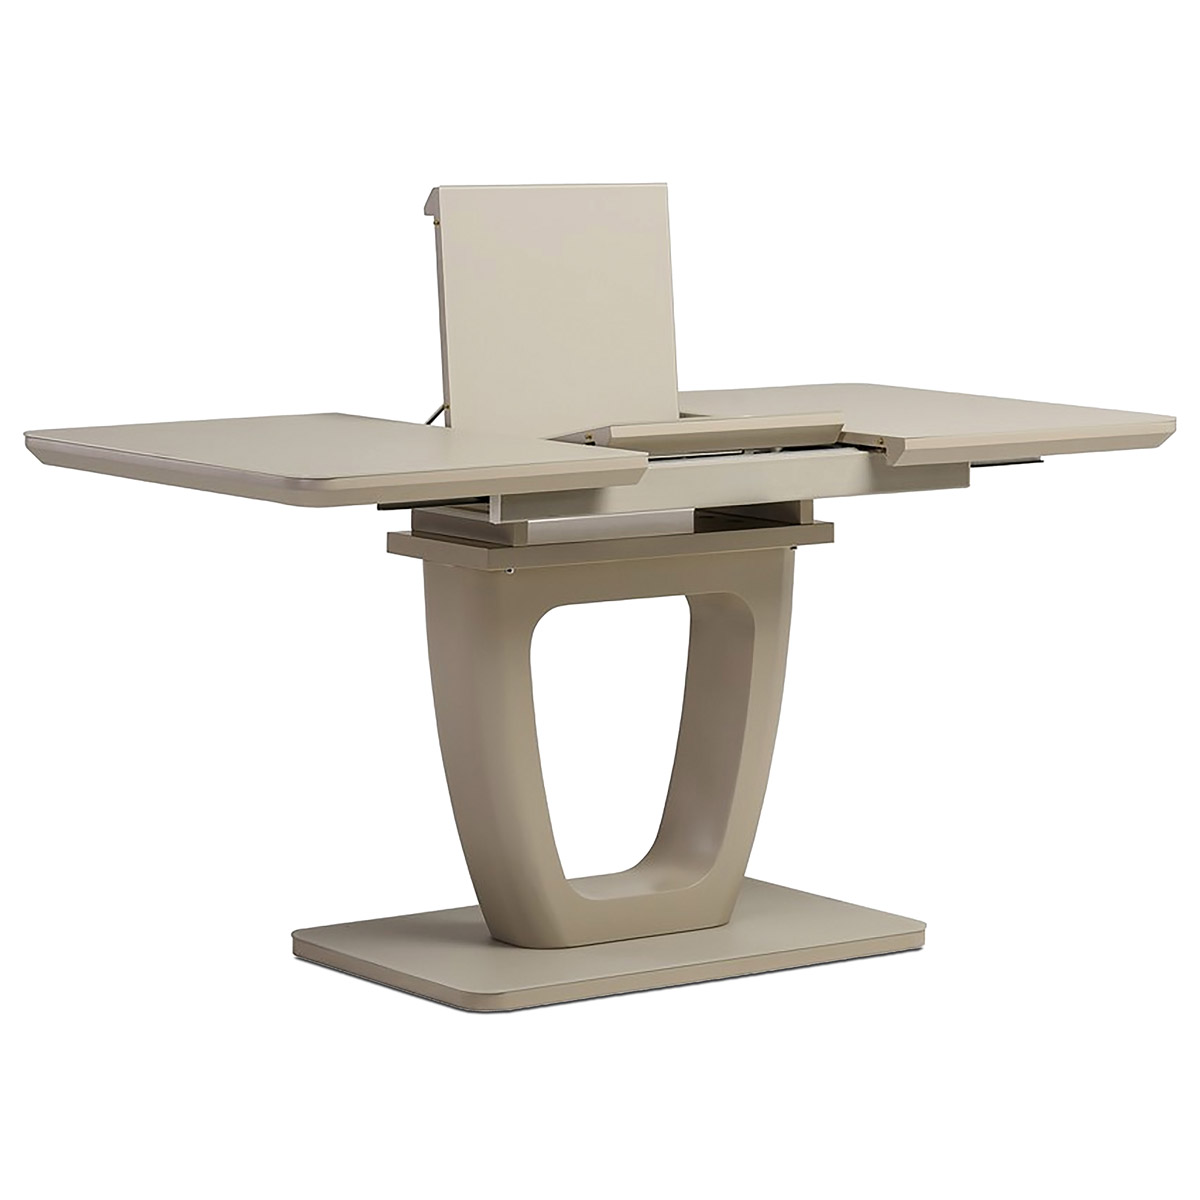 Jídelní stůl 110+40x75 cm, cappuccino 4 mm skleněná deska, MDF, cappuccino mat - HT-430 CAP